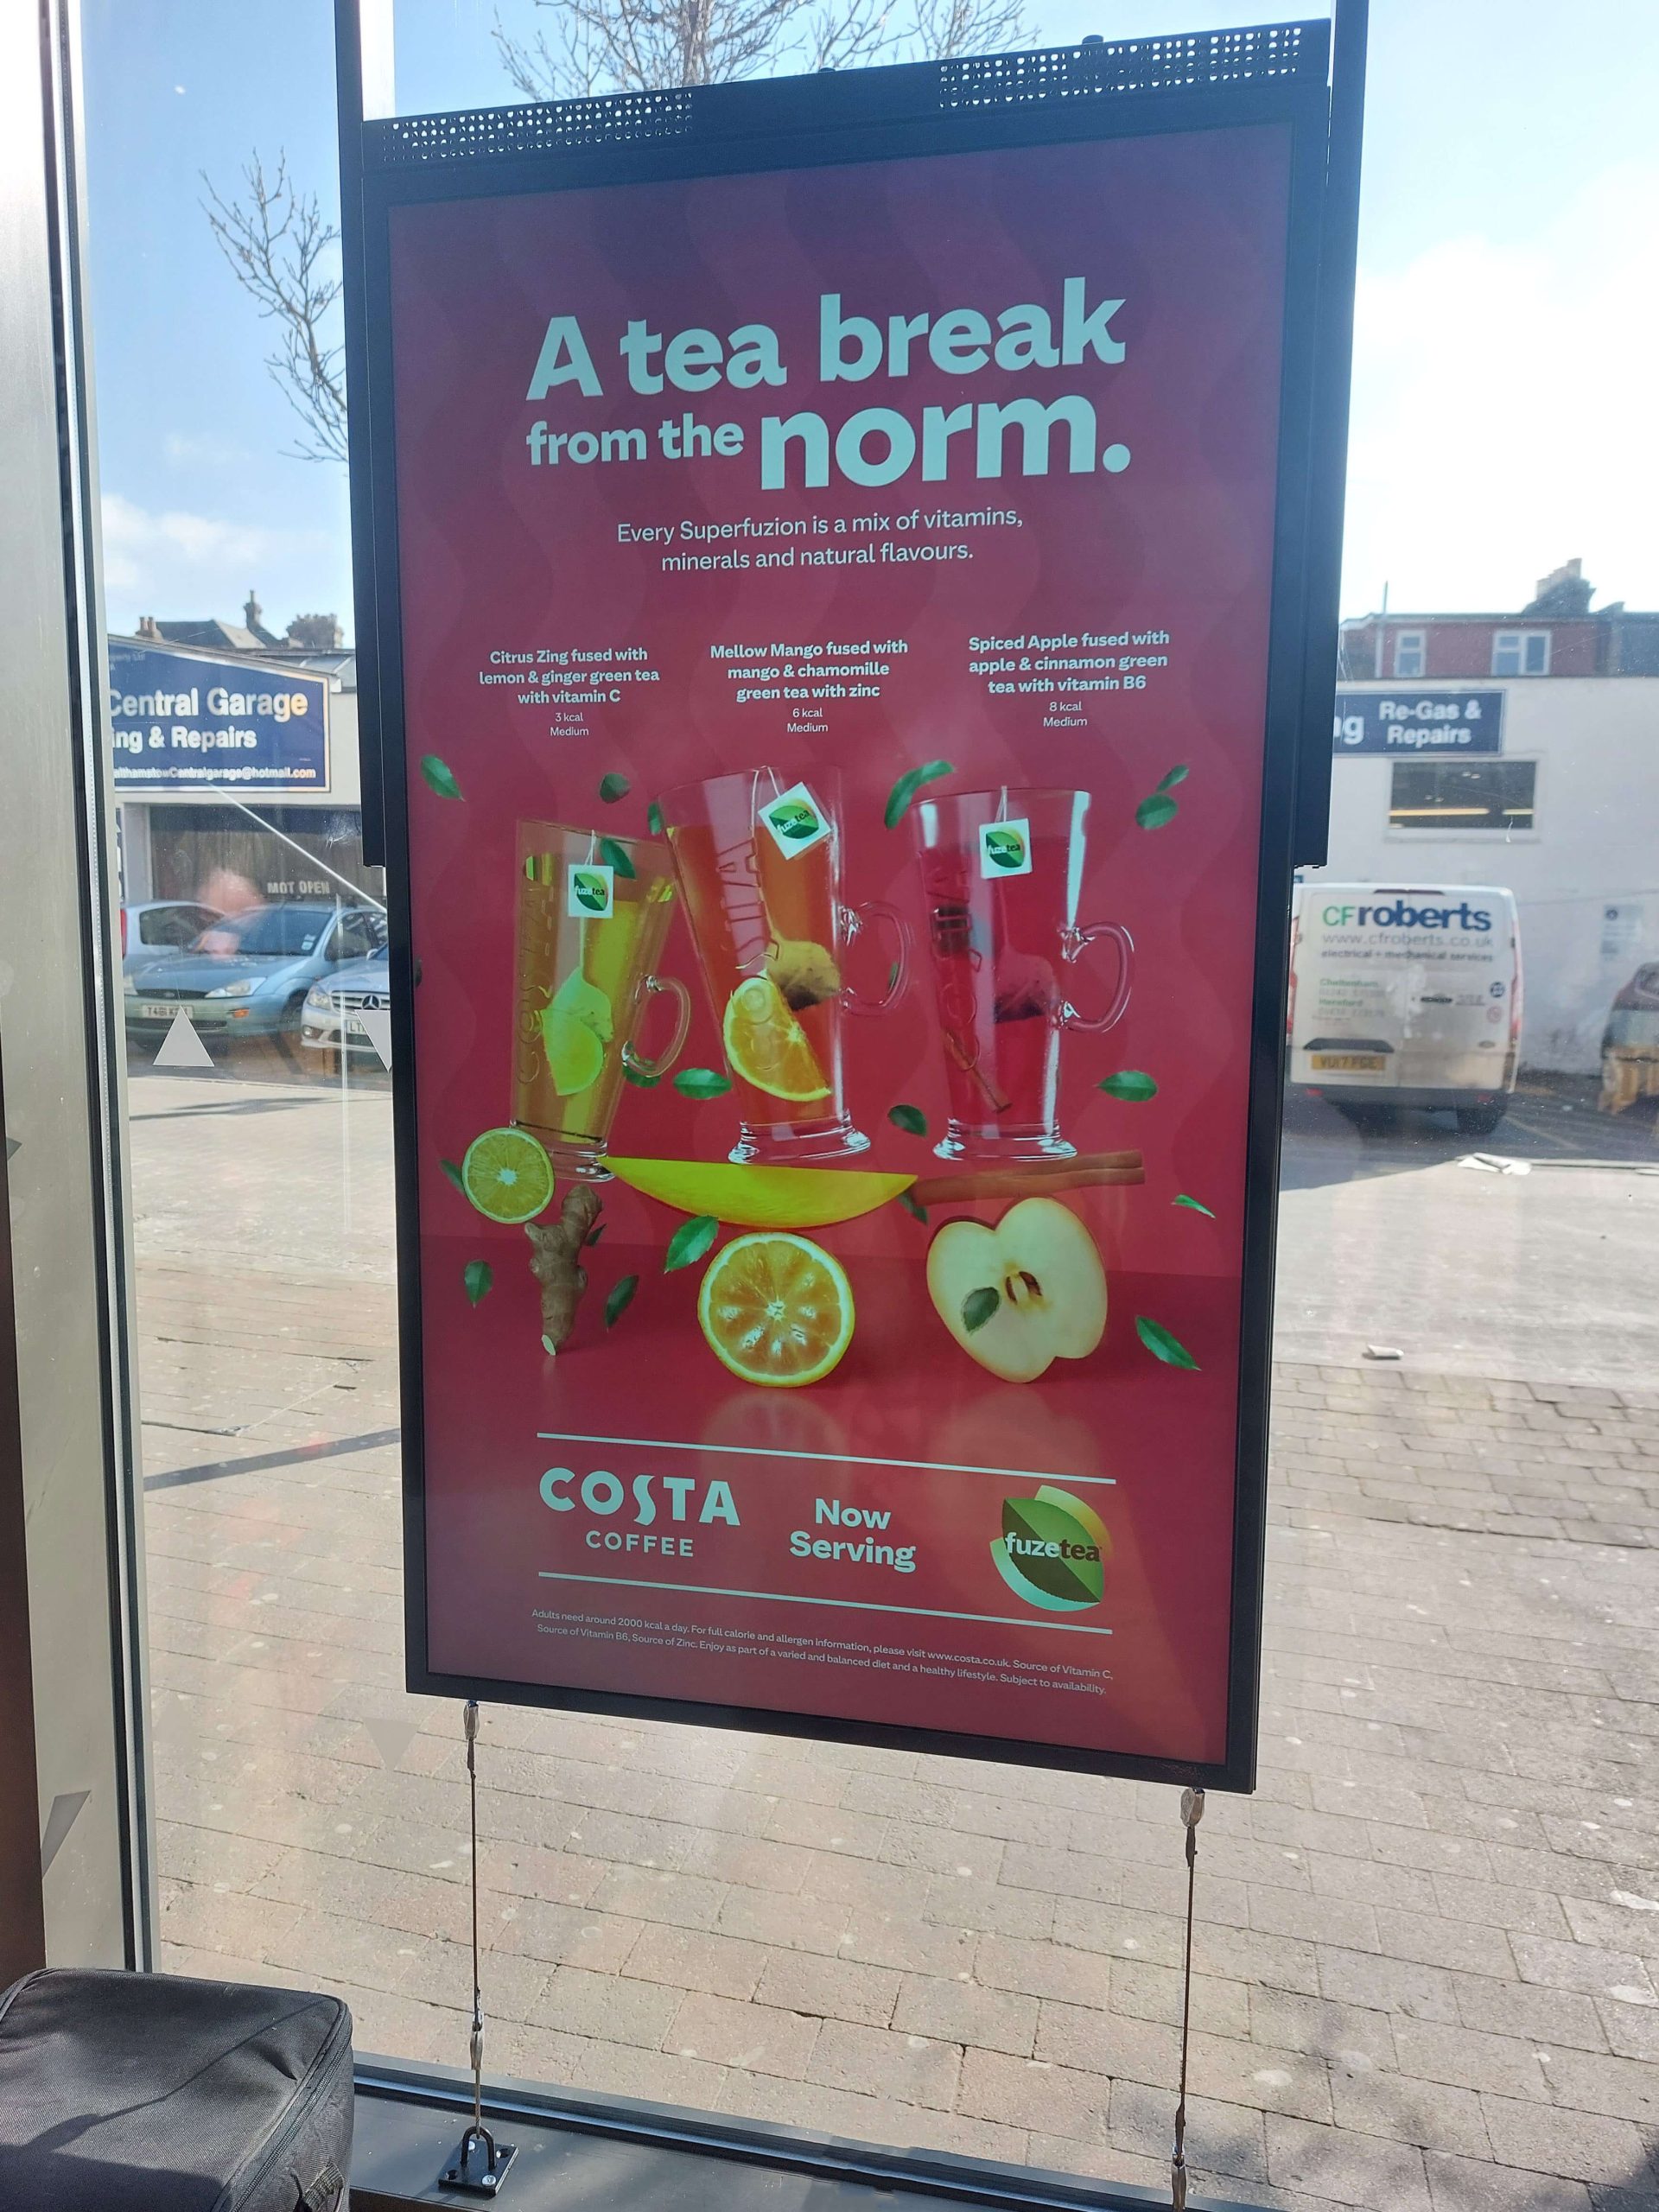 LamasaTech ultra high brightness window display showing Costa Coffee advert